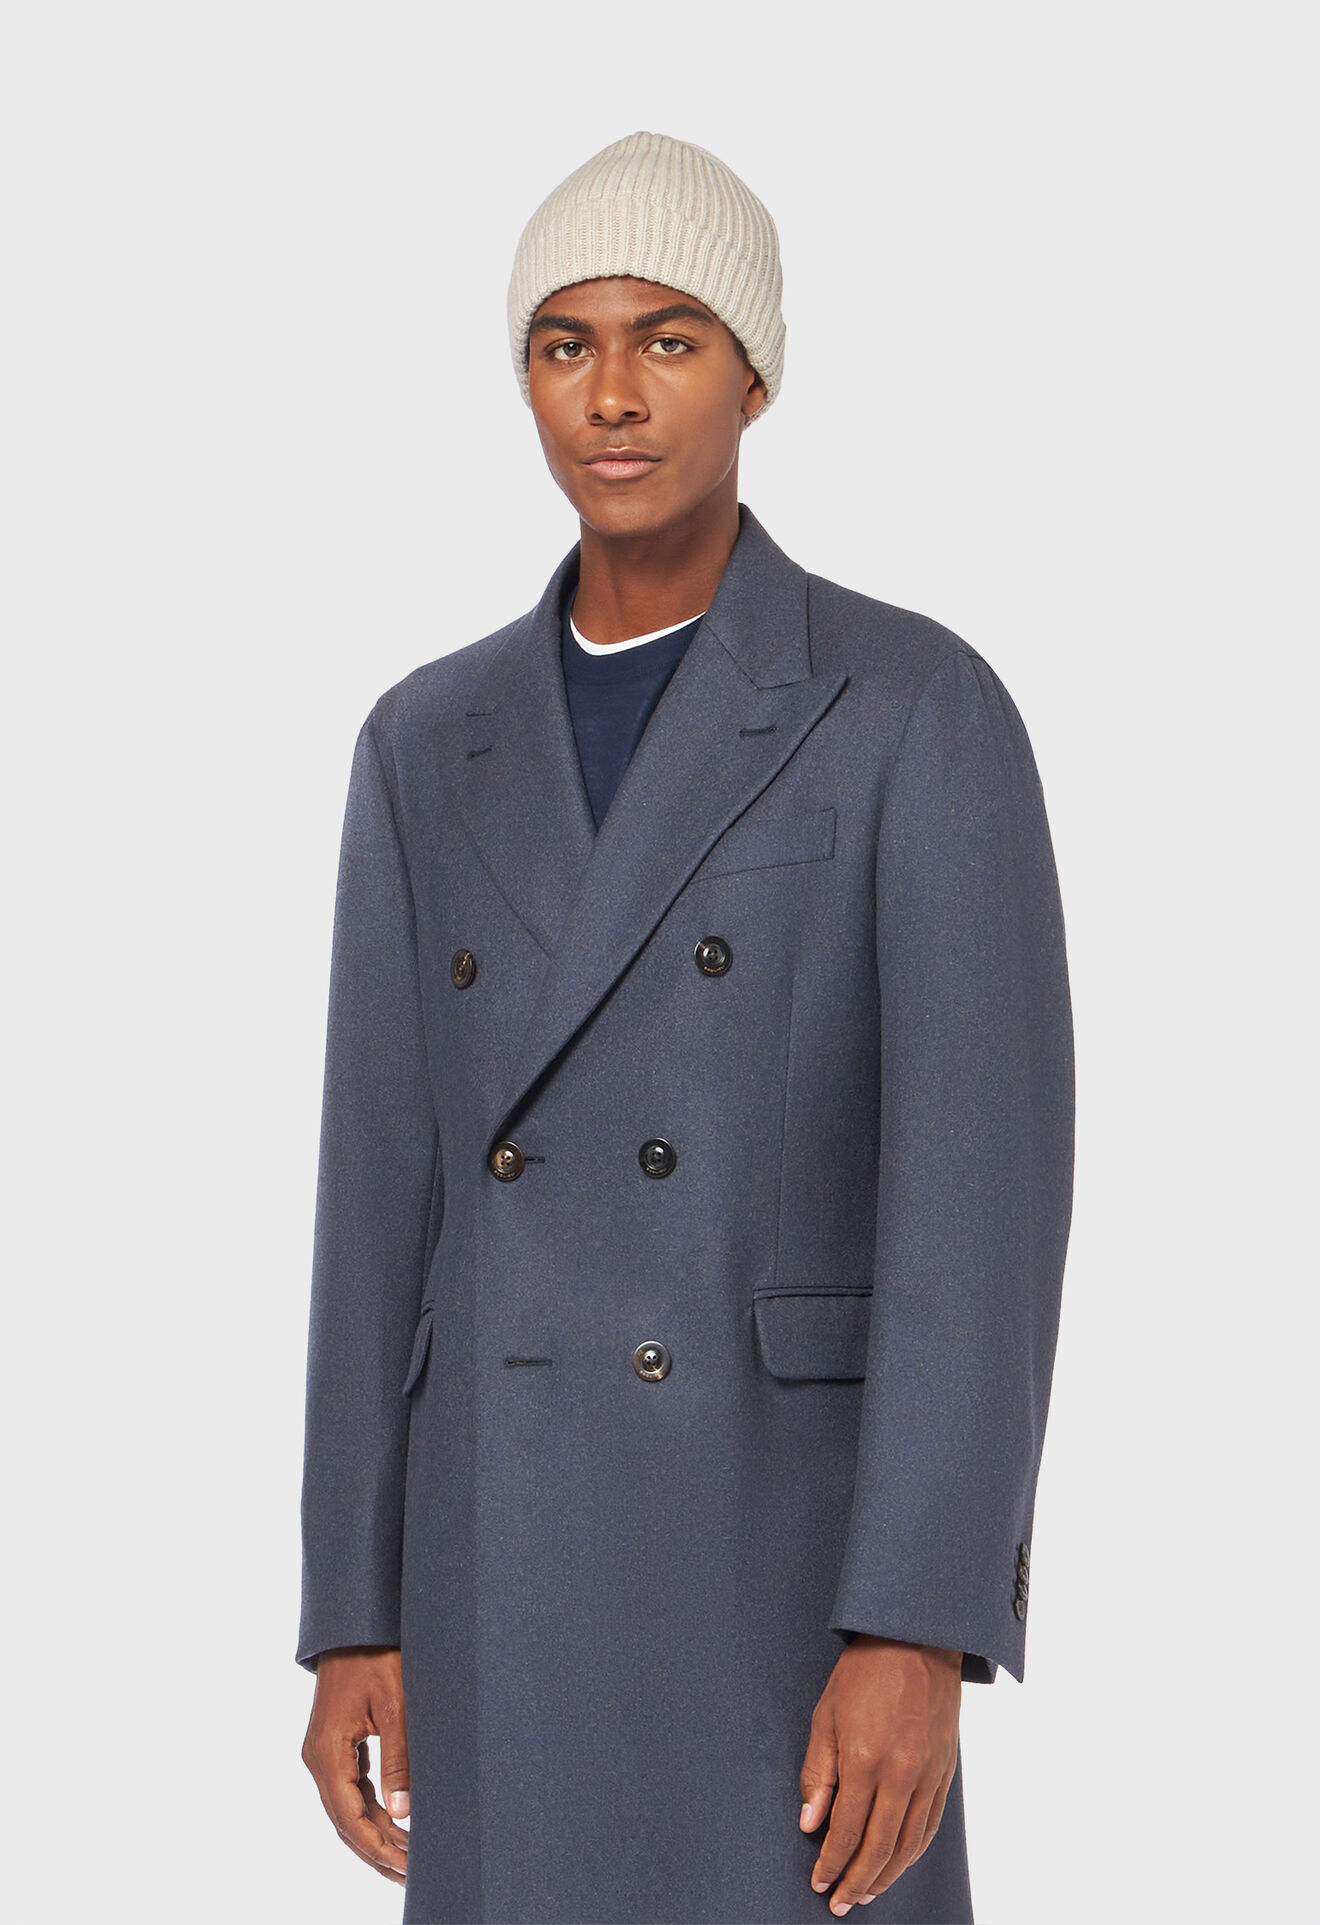 Blue Wool Coat, Double Breasted Wool Coat, Long Wool Coat for